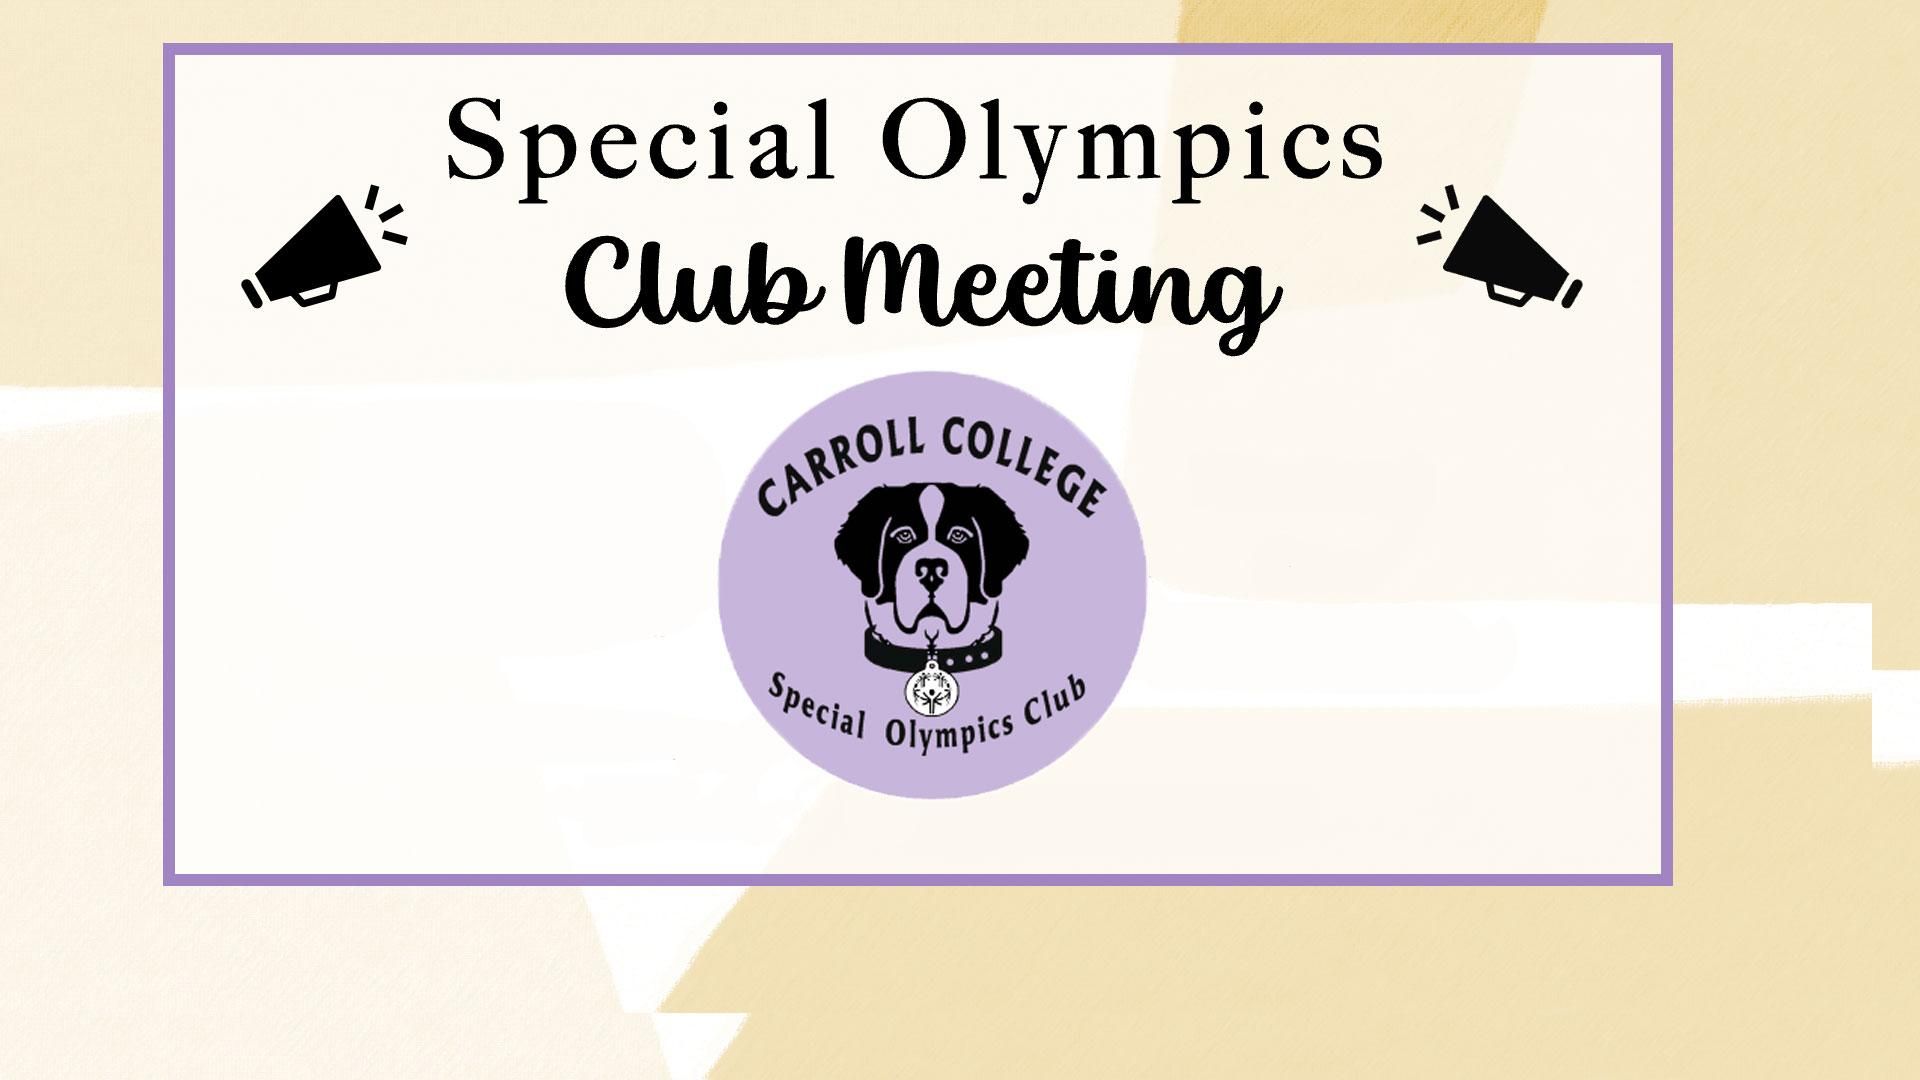 Special Olympics Club